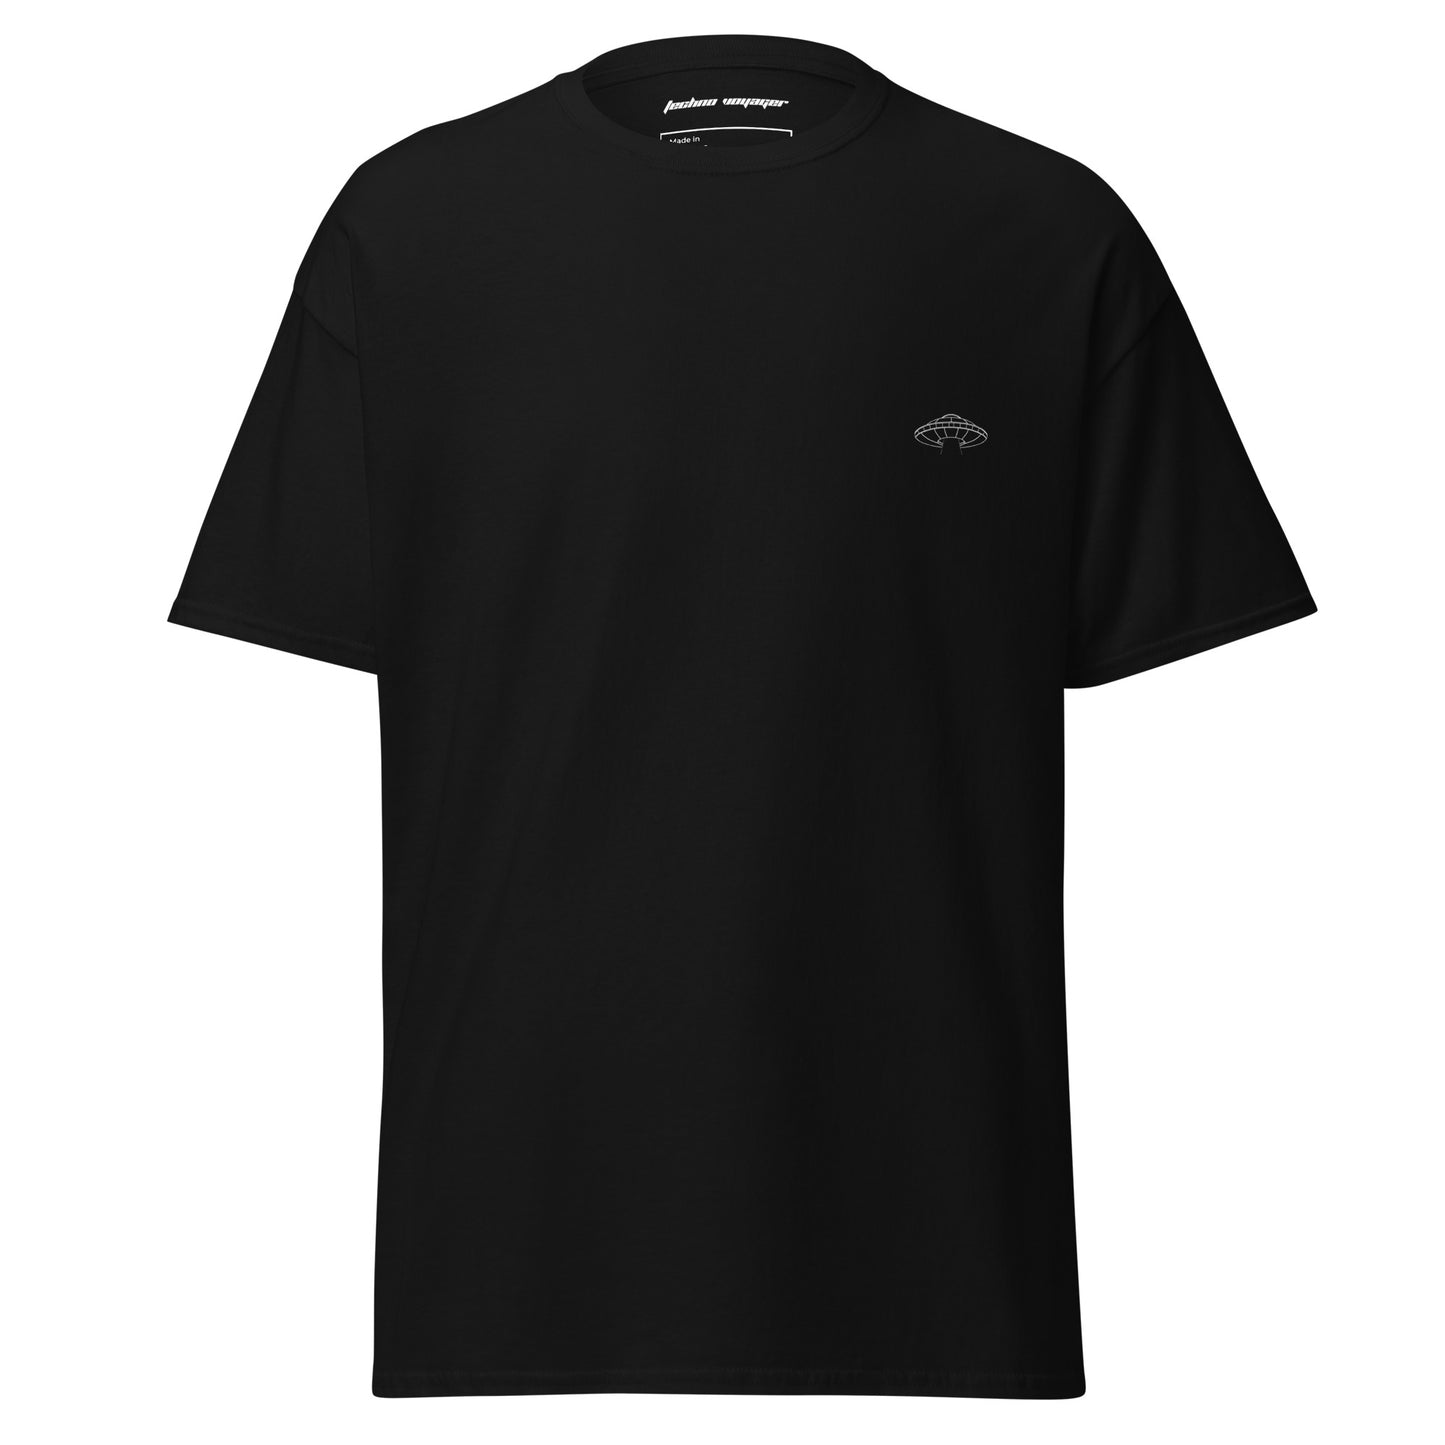 'GEO-BLOCK' Back Print T-Shirt